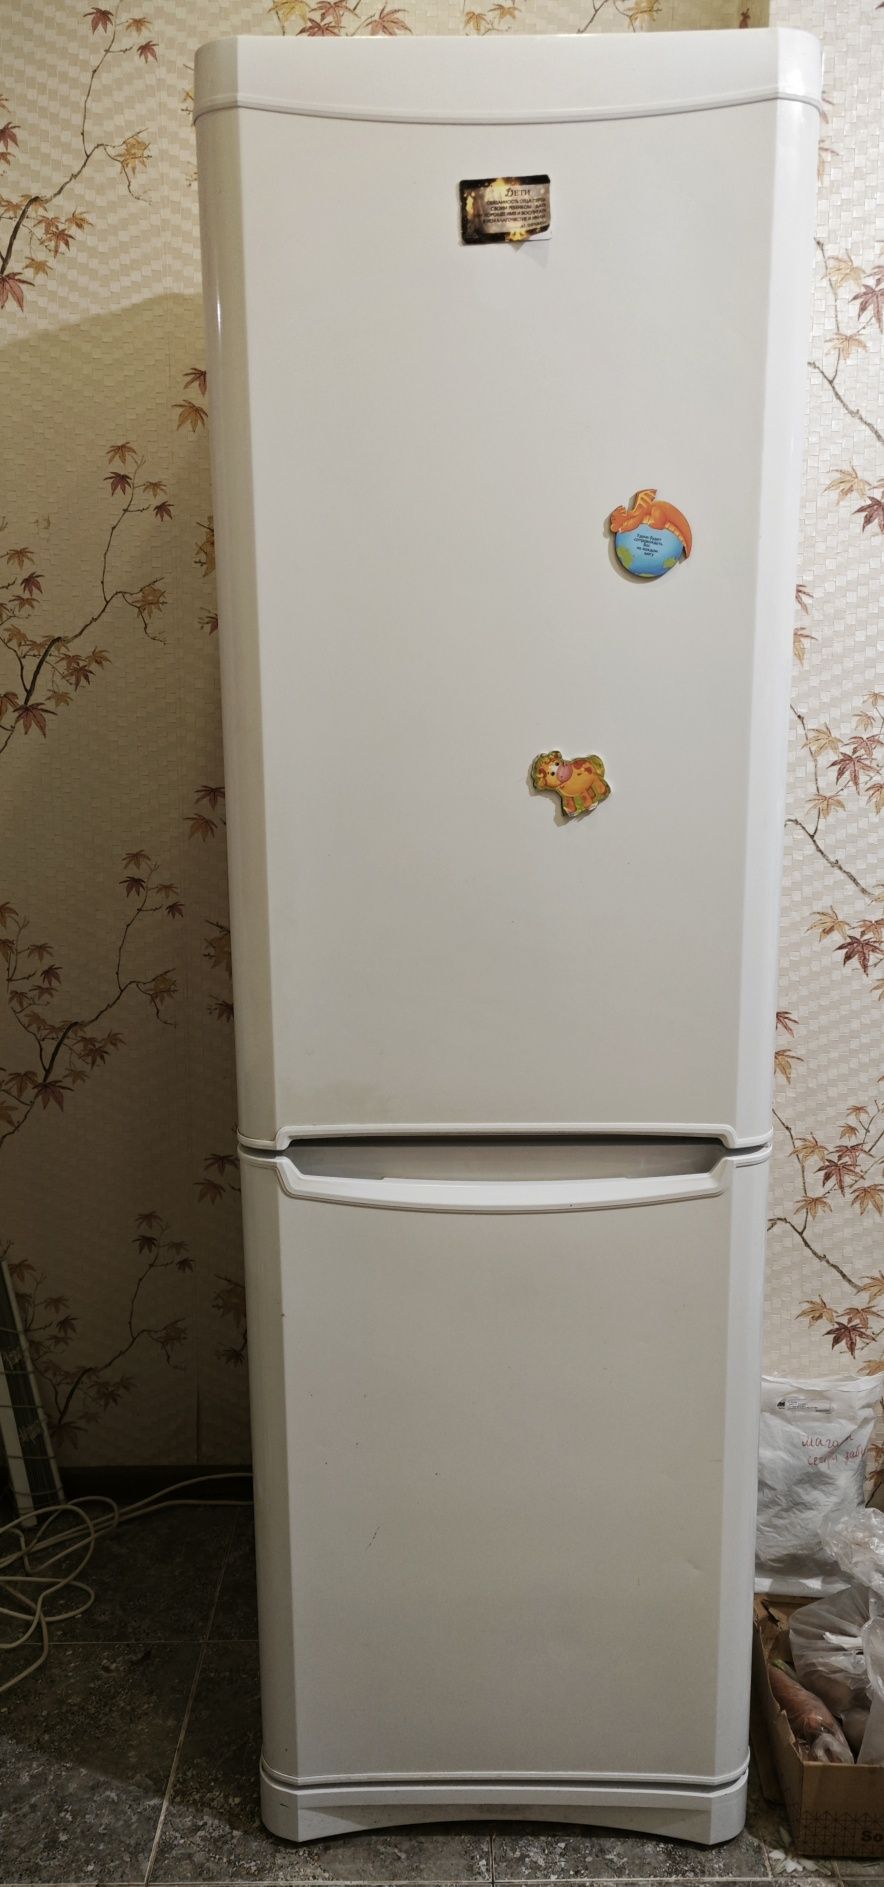 Холодильник 2х камерный А класса